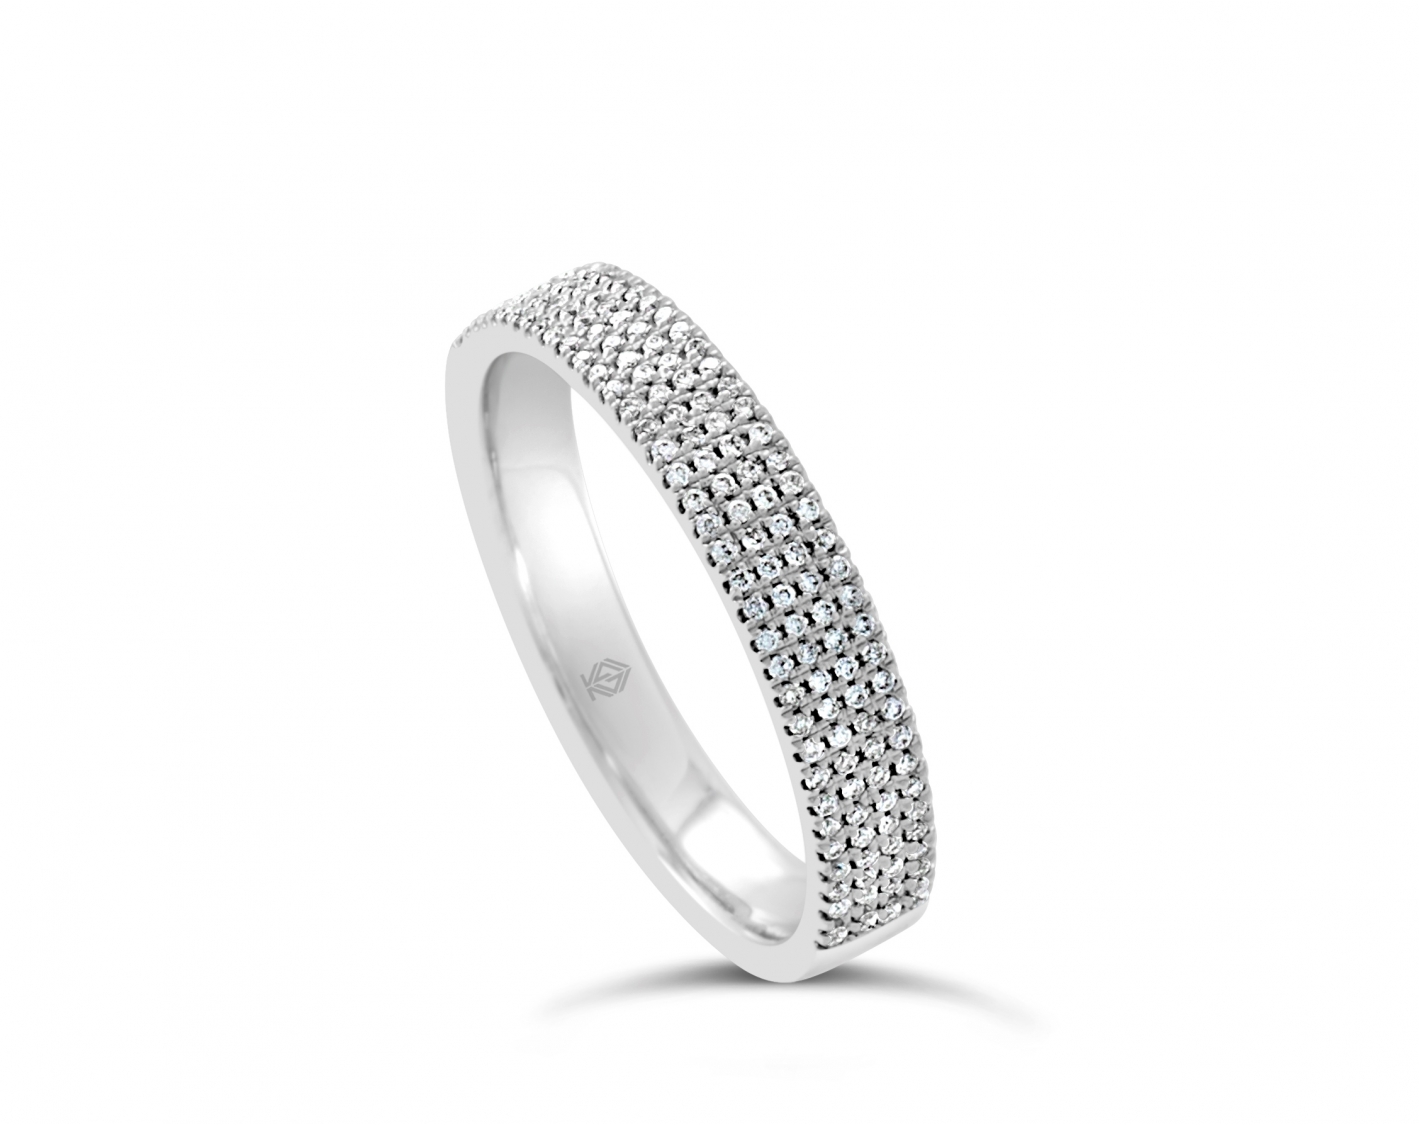 18k rose gold 4- row half eternity pave set round shaped diamond wedding ring Photos & images